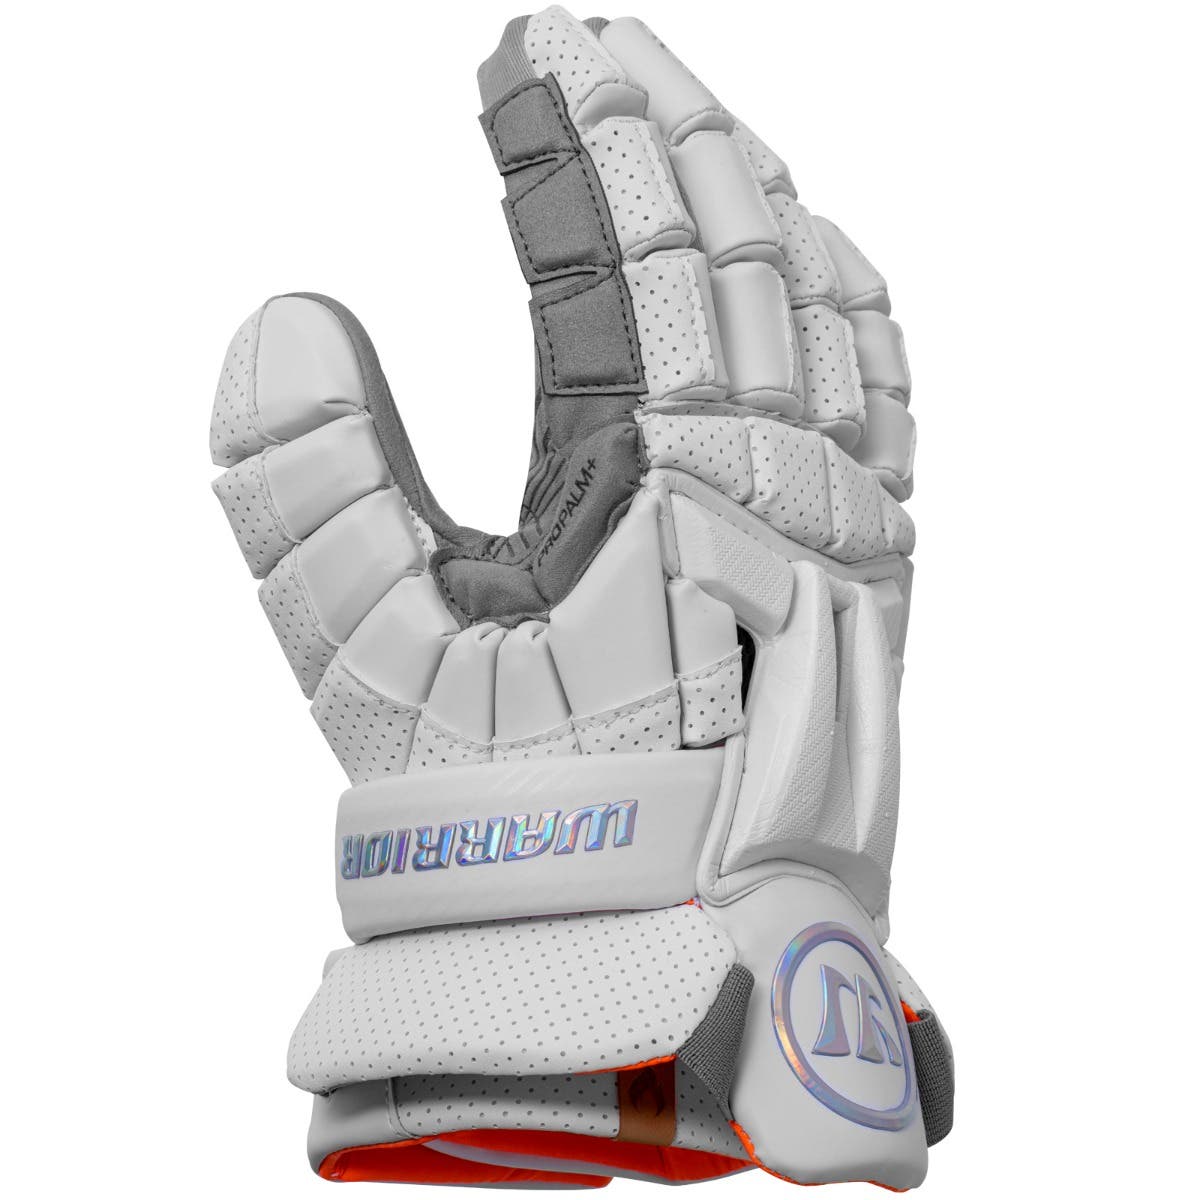 Warrior Burn XP2 Lacrosse Glove